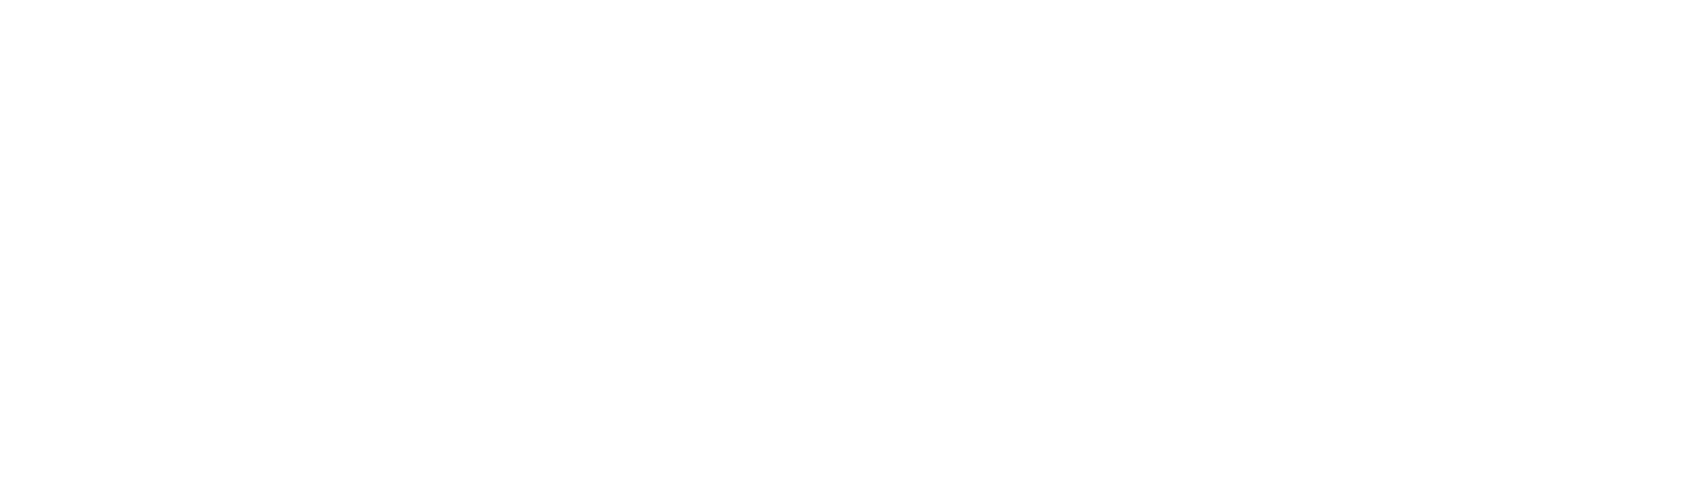 CO2 formel